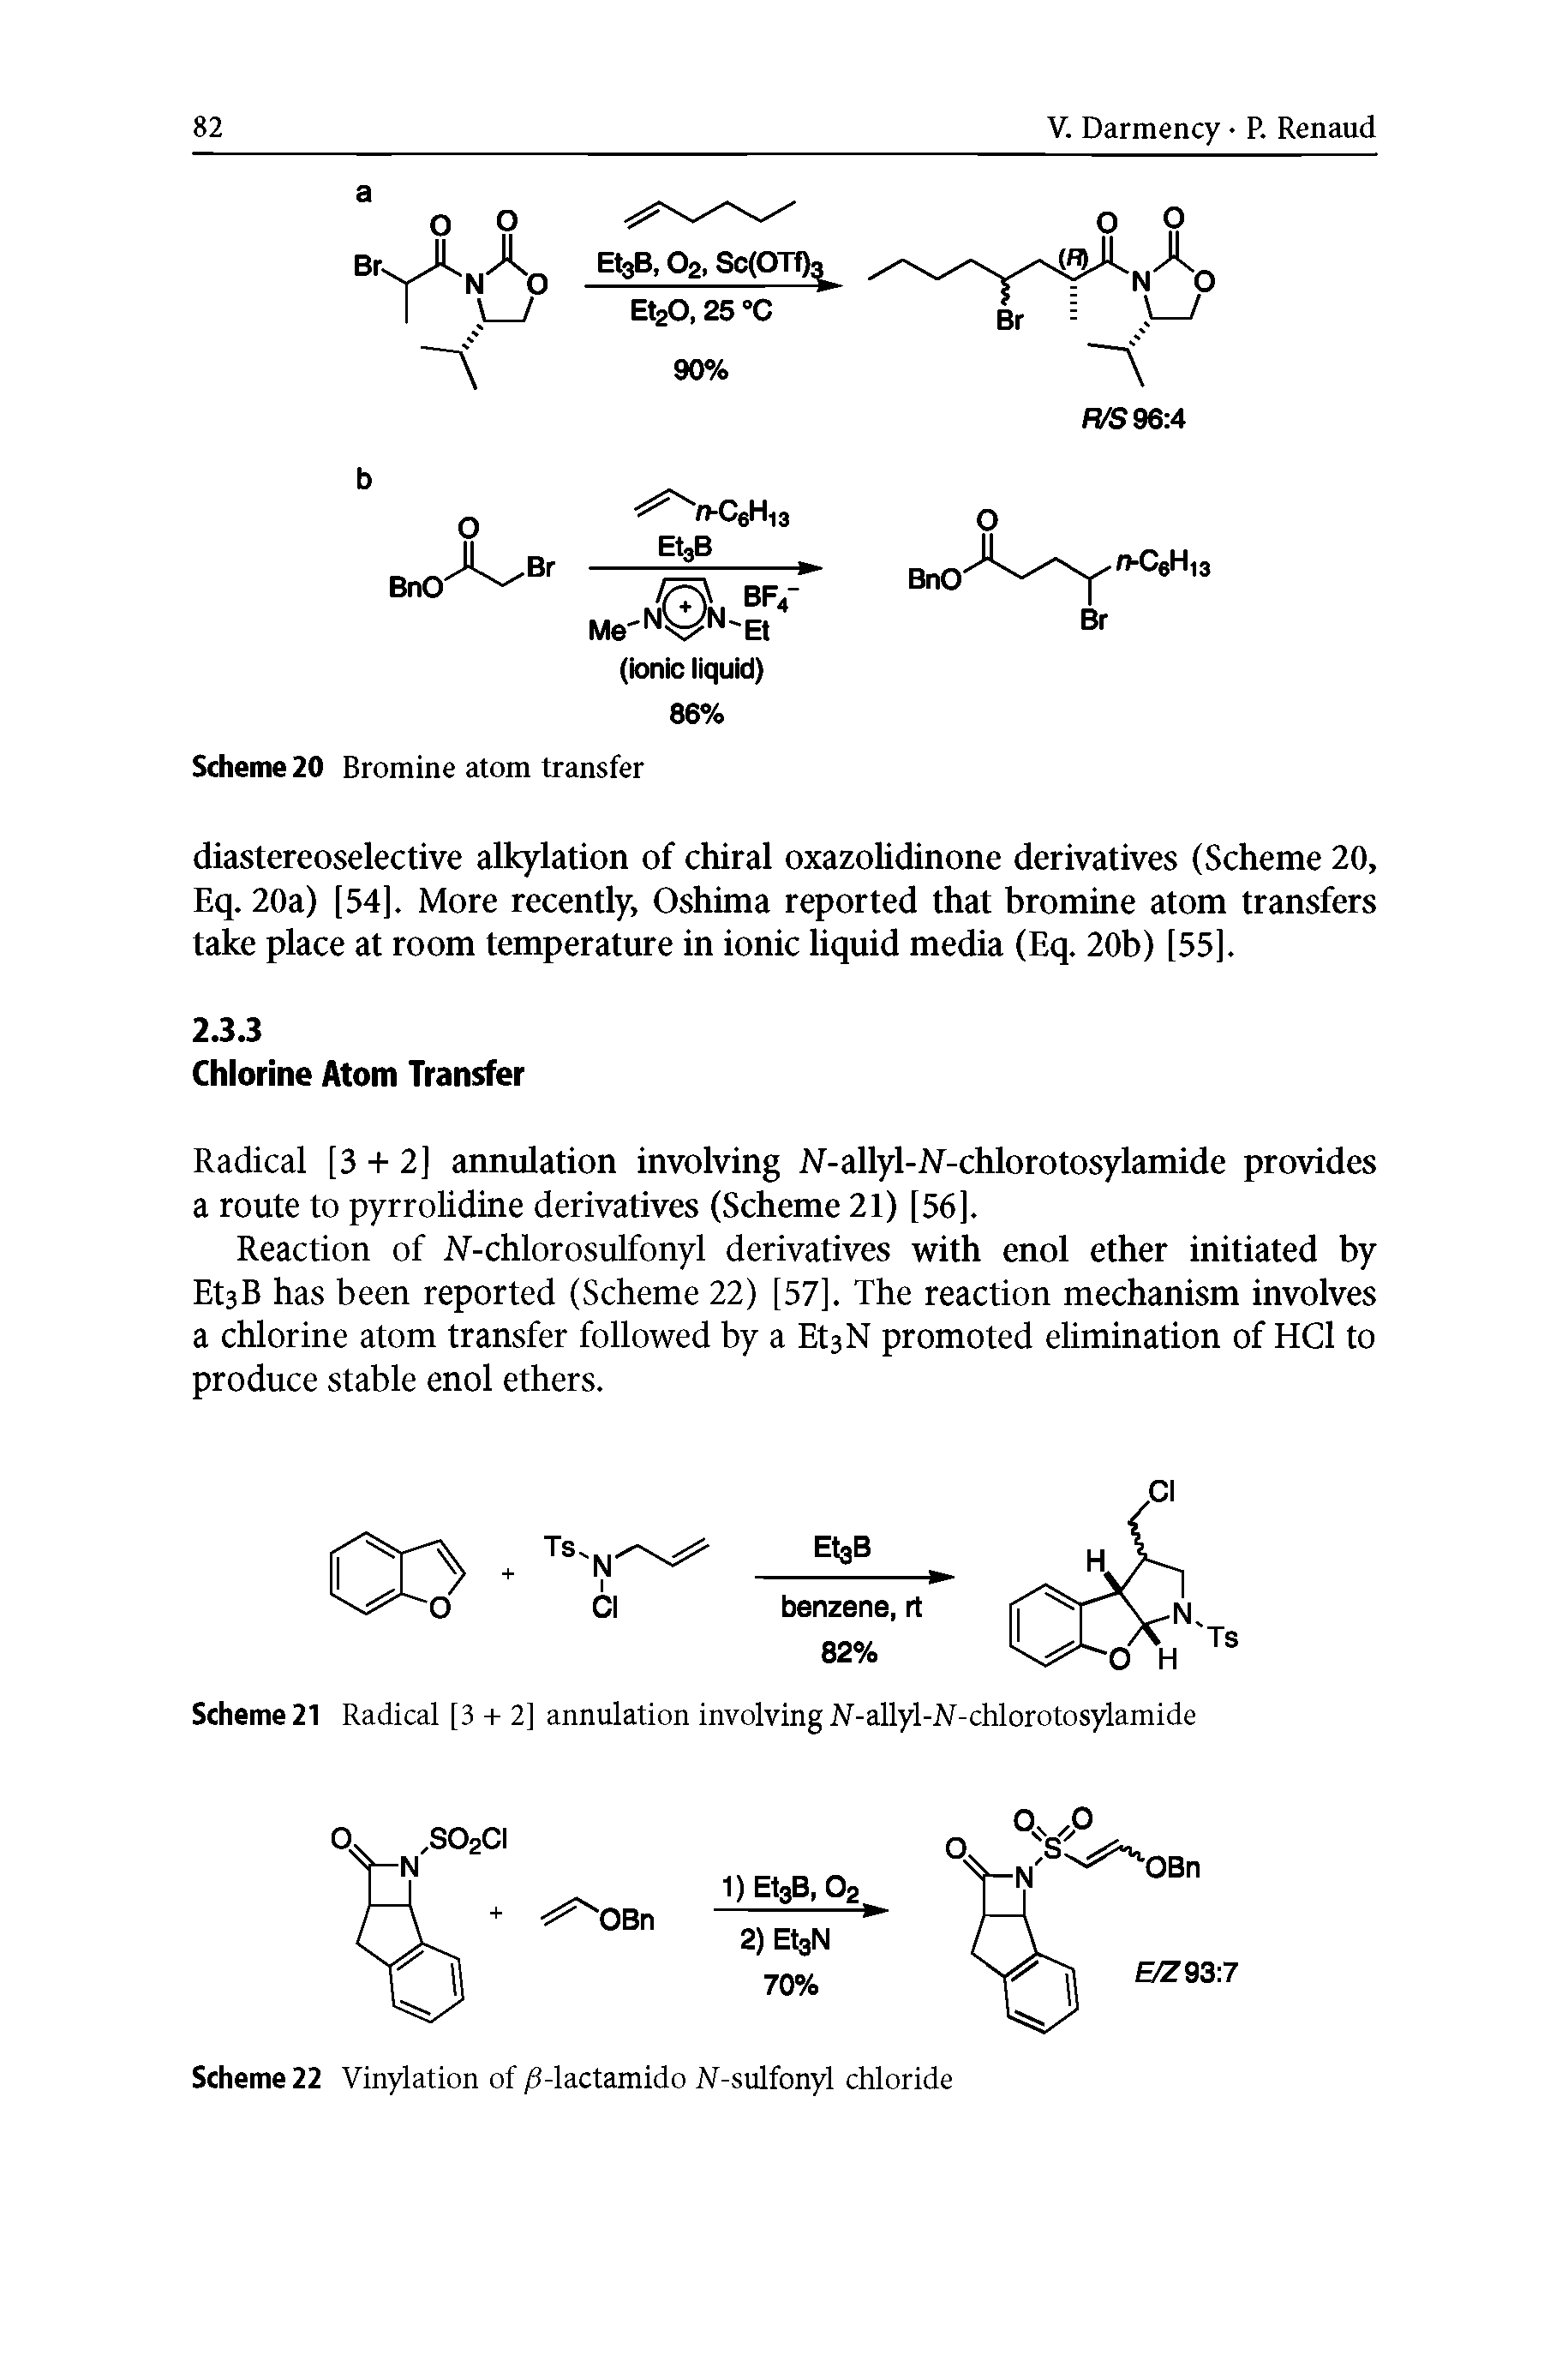 Scheme 21 Radical [3 + 2] annulation involving M-allyl-W-chlorotosylamide...